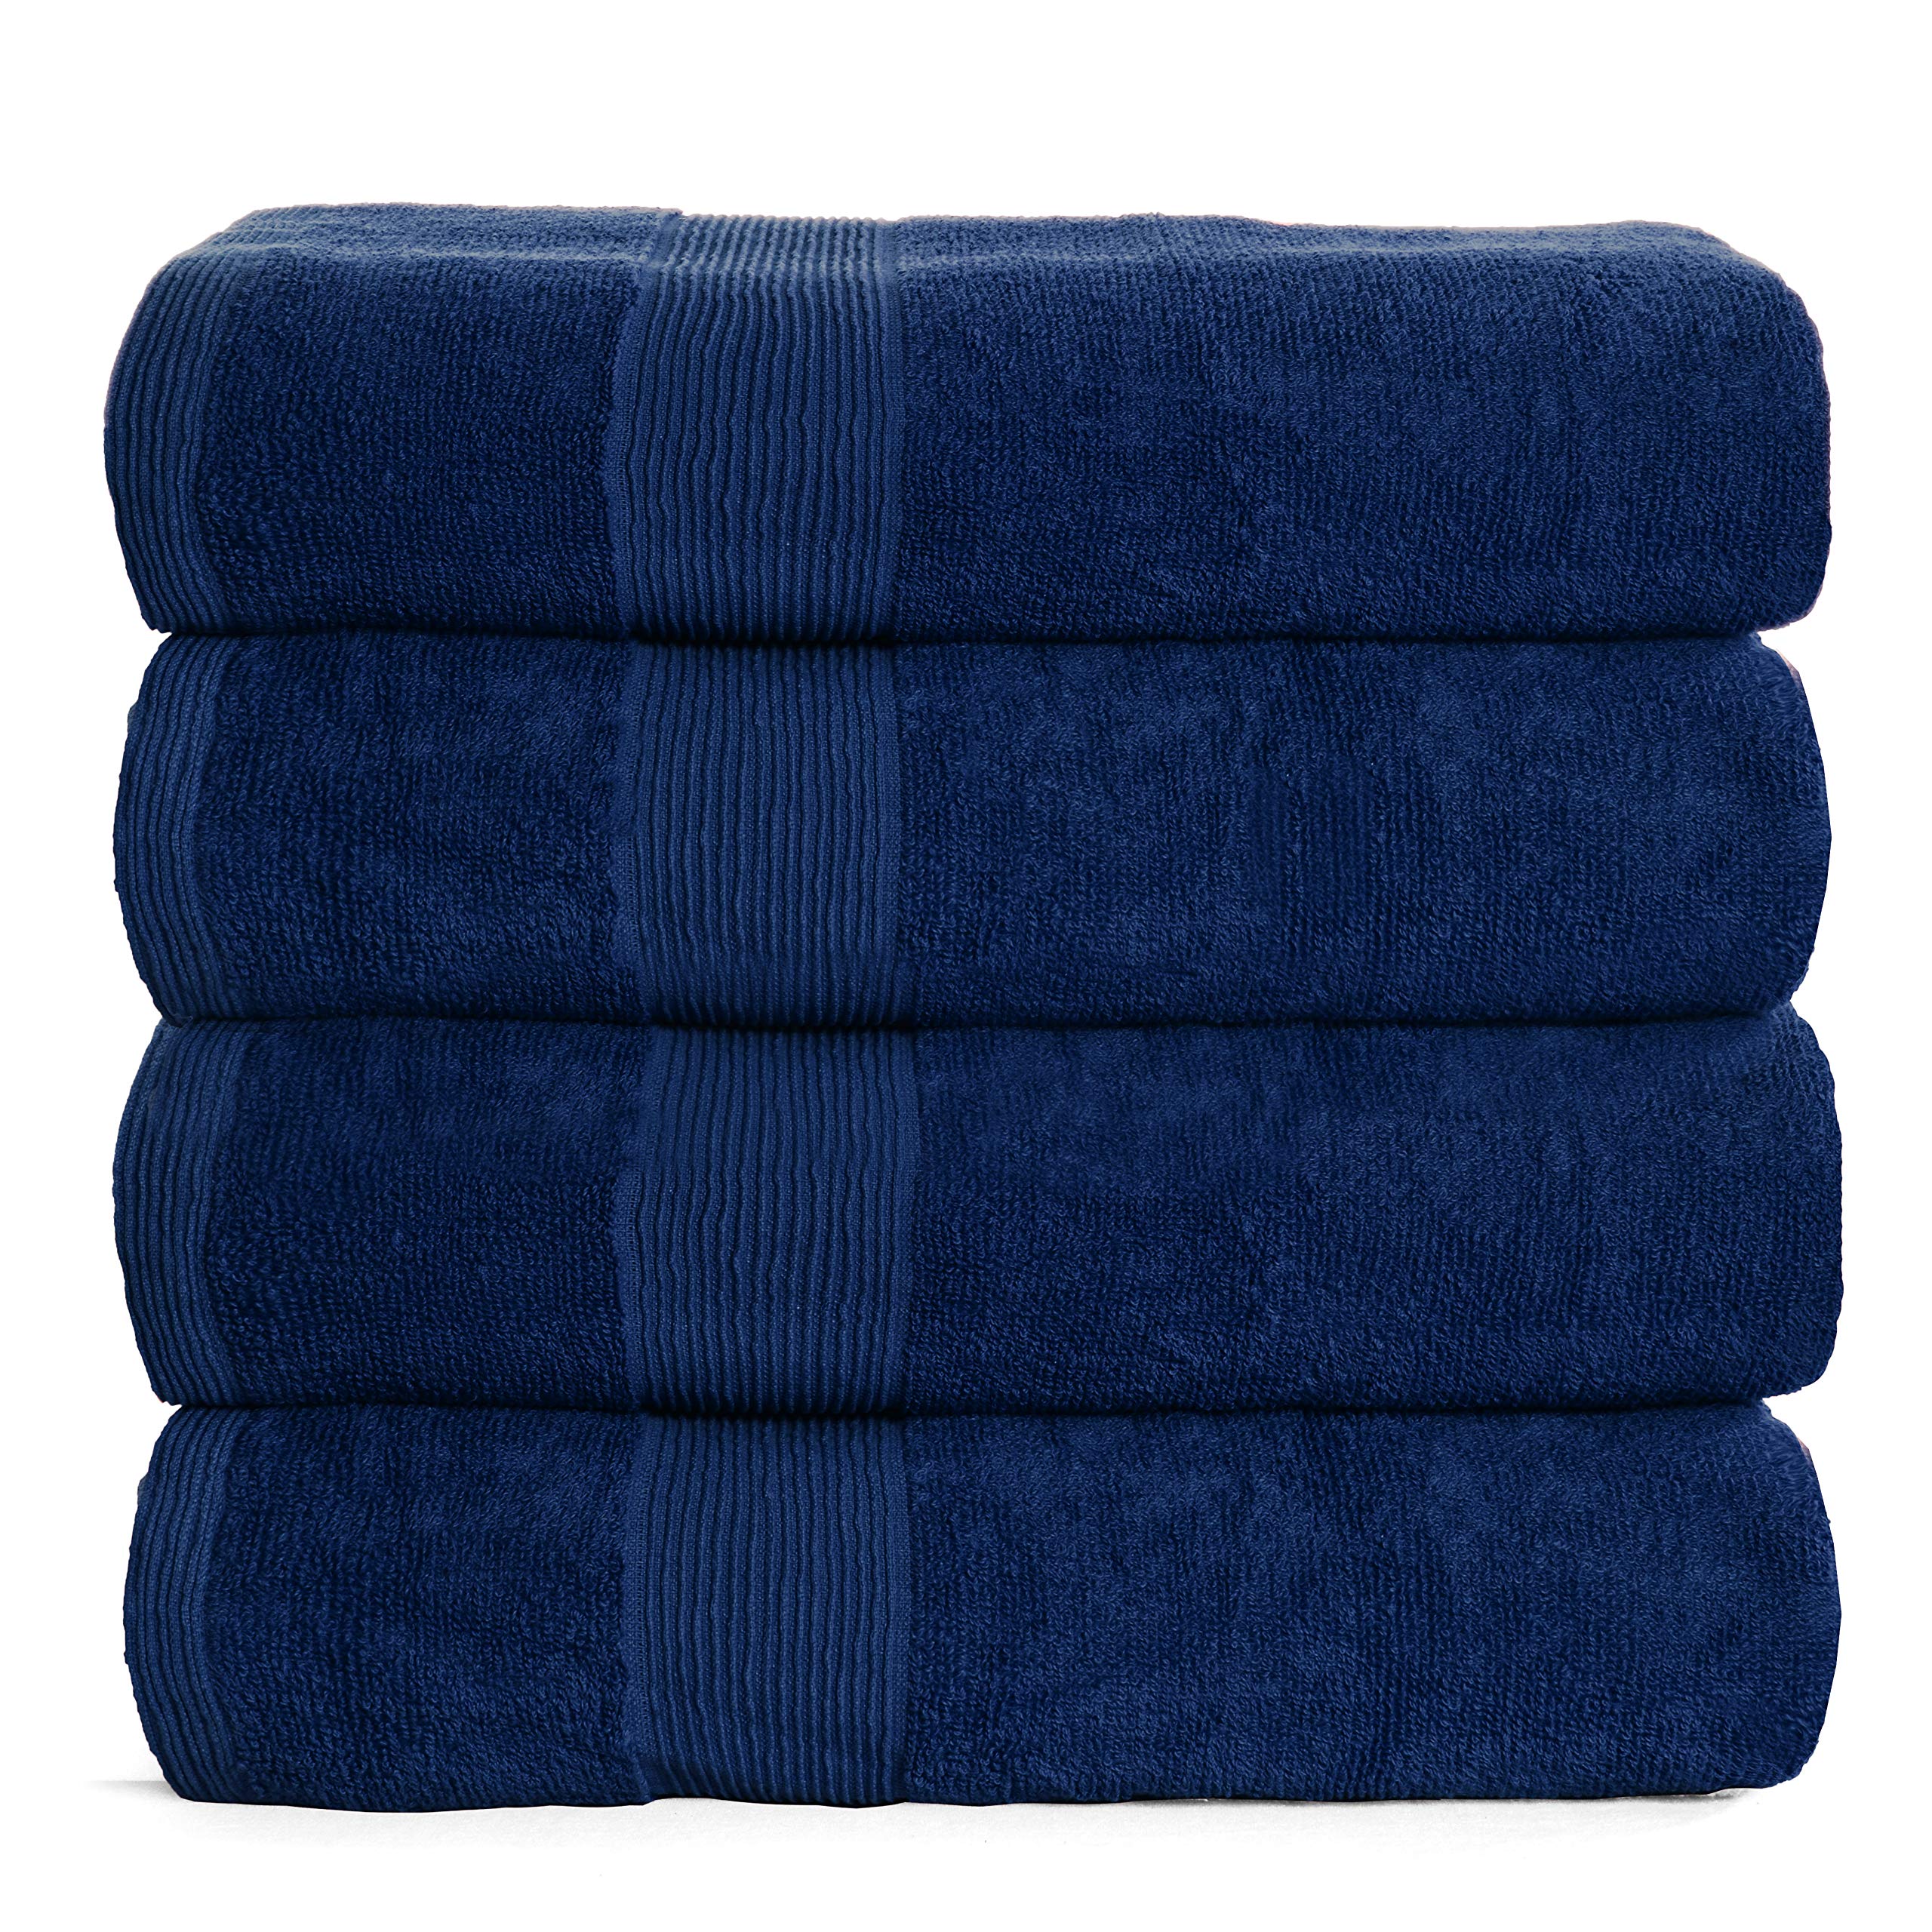 Elvana Home 4 Pack Bath Towel Set 27x54, 100% Ring Spun Cotton, Ultra Soft Highly Absorbent Machine Washable Hotel Spa Quality Bath Towels for Bath...